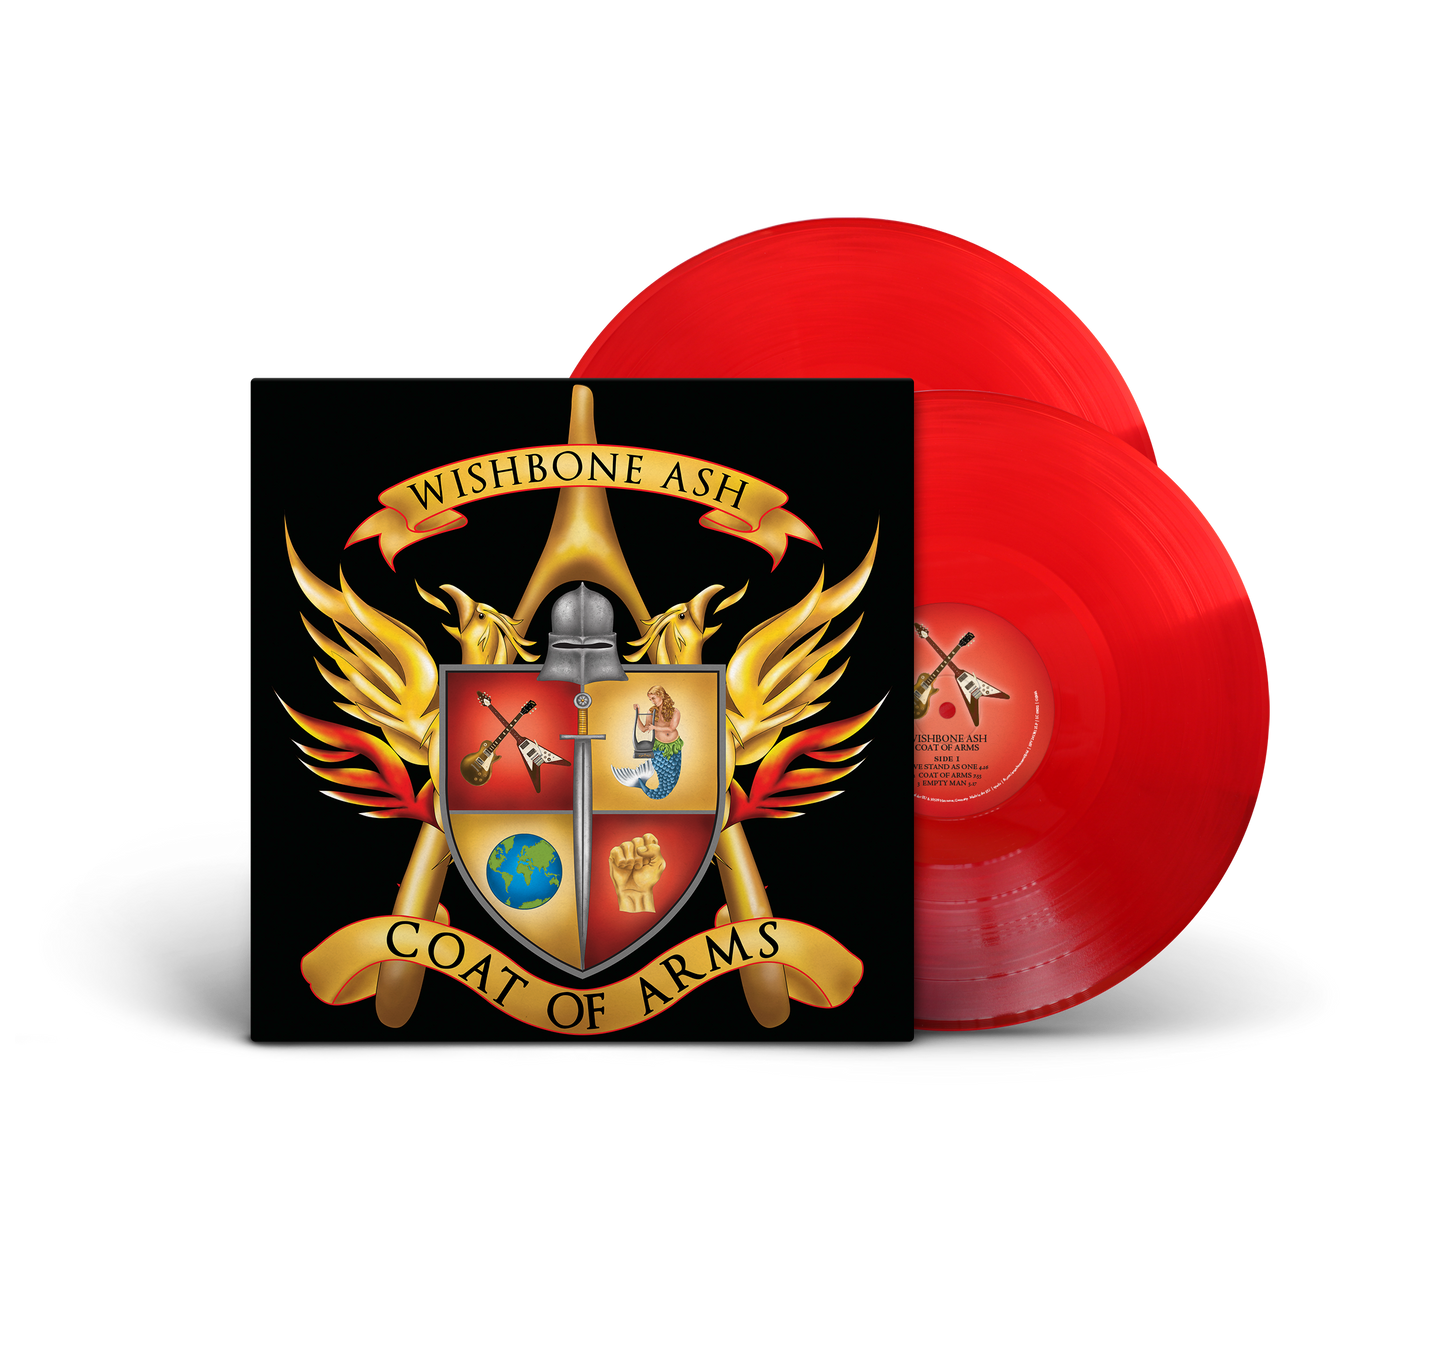 Wishbone Ash "Coat Of Arms" LP (red vinyl)